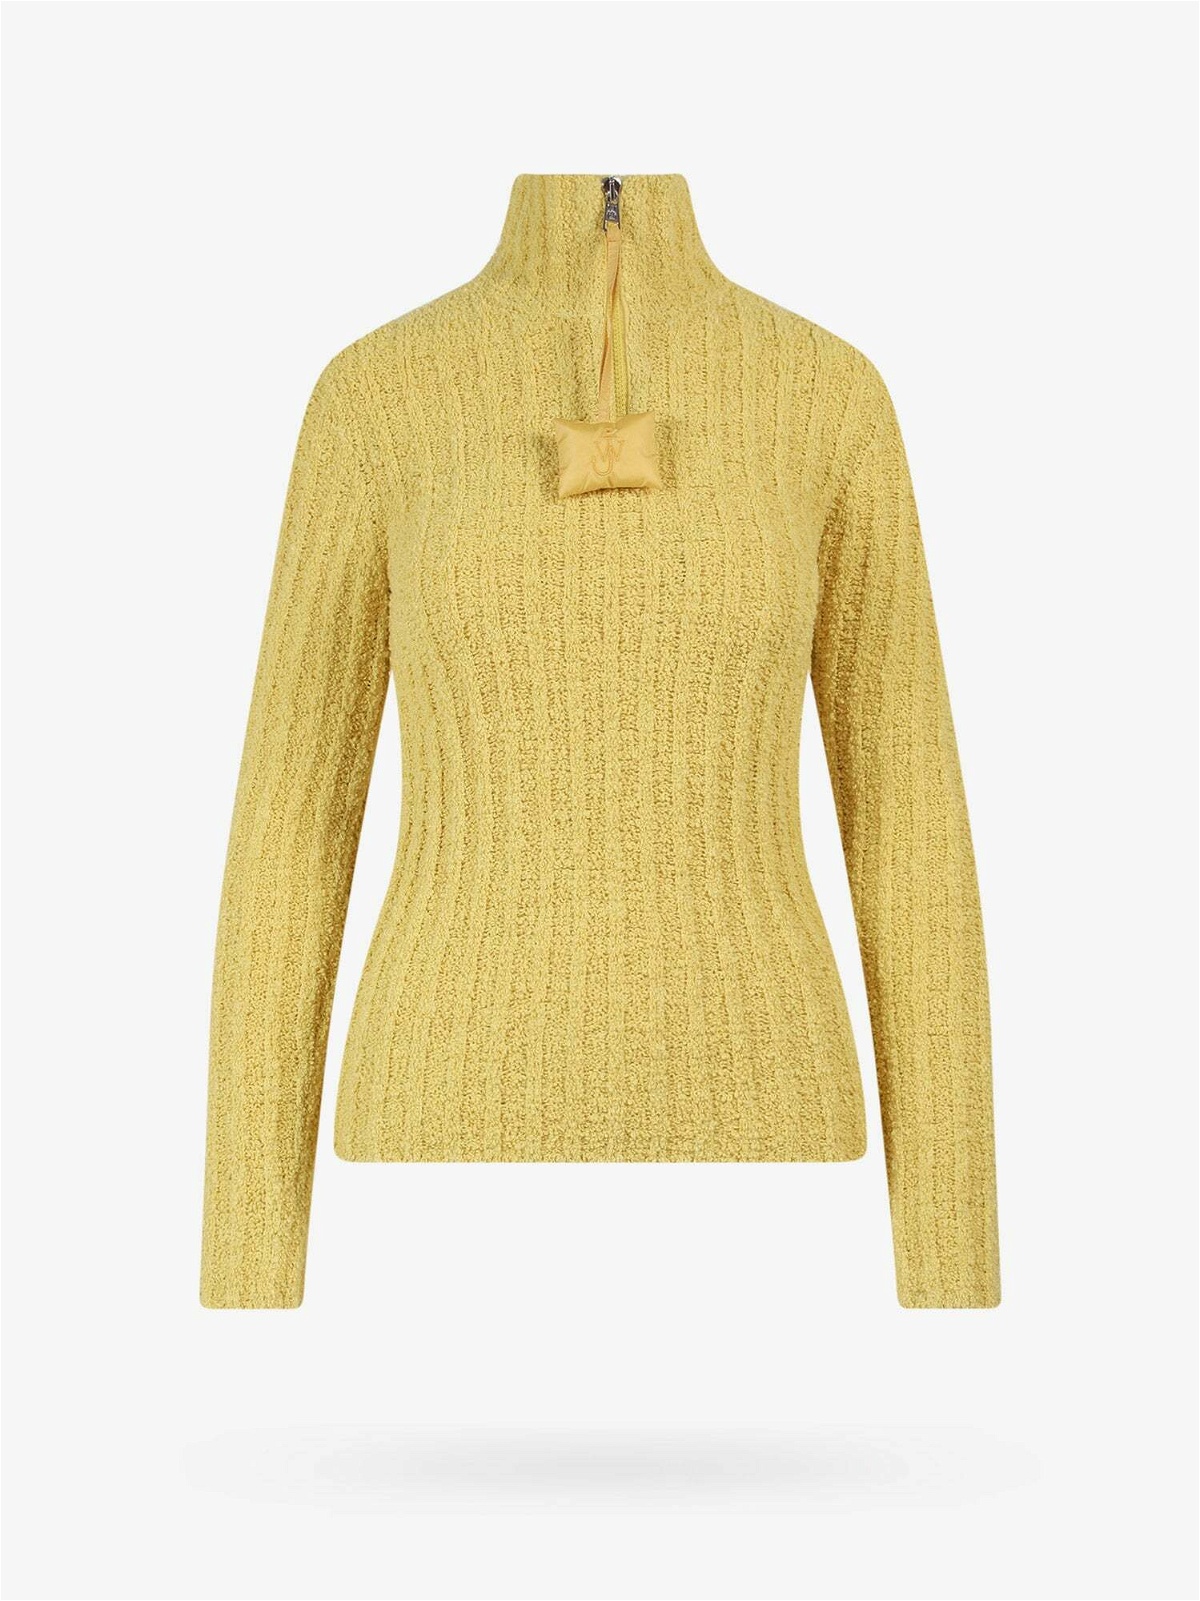 Moncler Genius Sweater Yellow Womens Moncler Genius